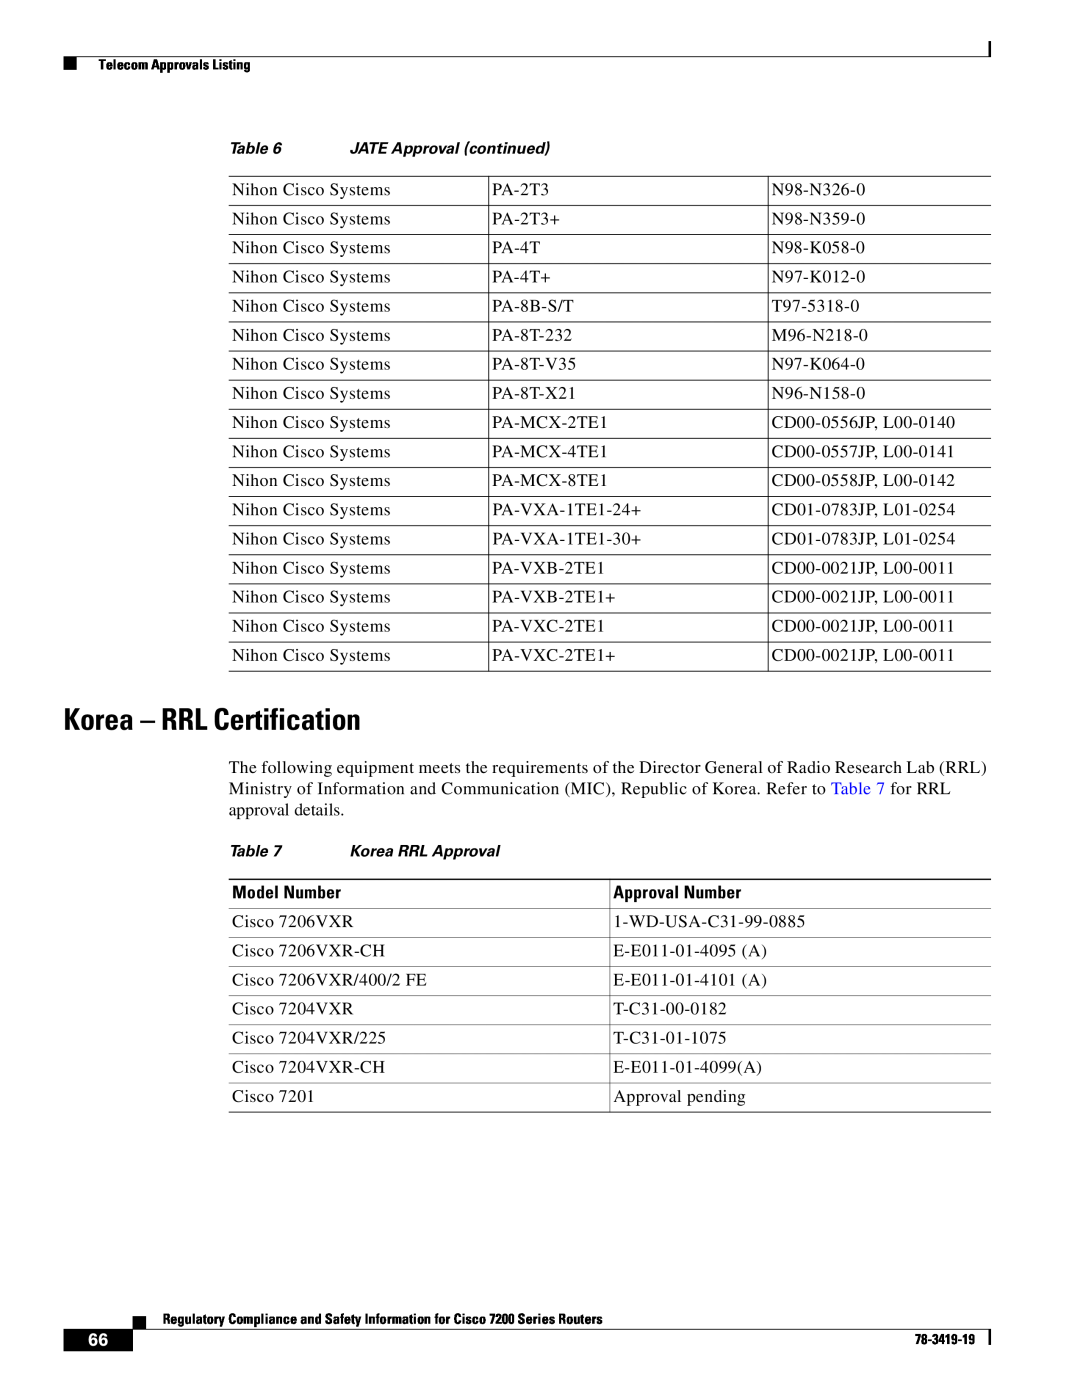 Cisco Systems 7204 VXR, 7206 VXR, 7200 Series, 7202 Korea - RRL Certification, JATE Approval continued, Korea RRL Approval 